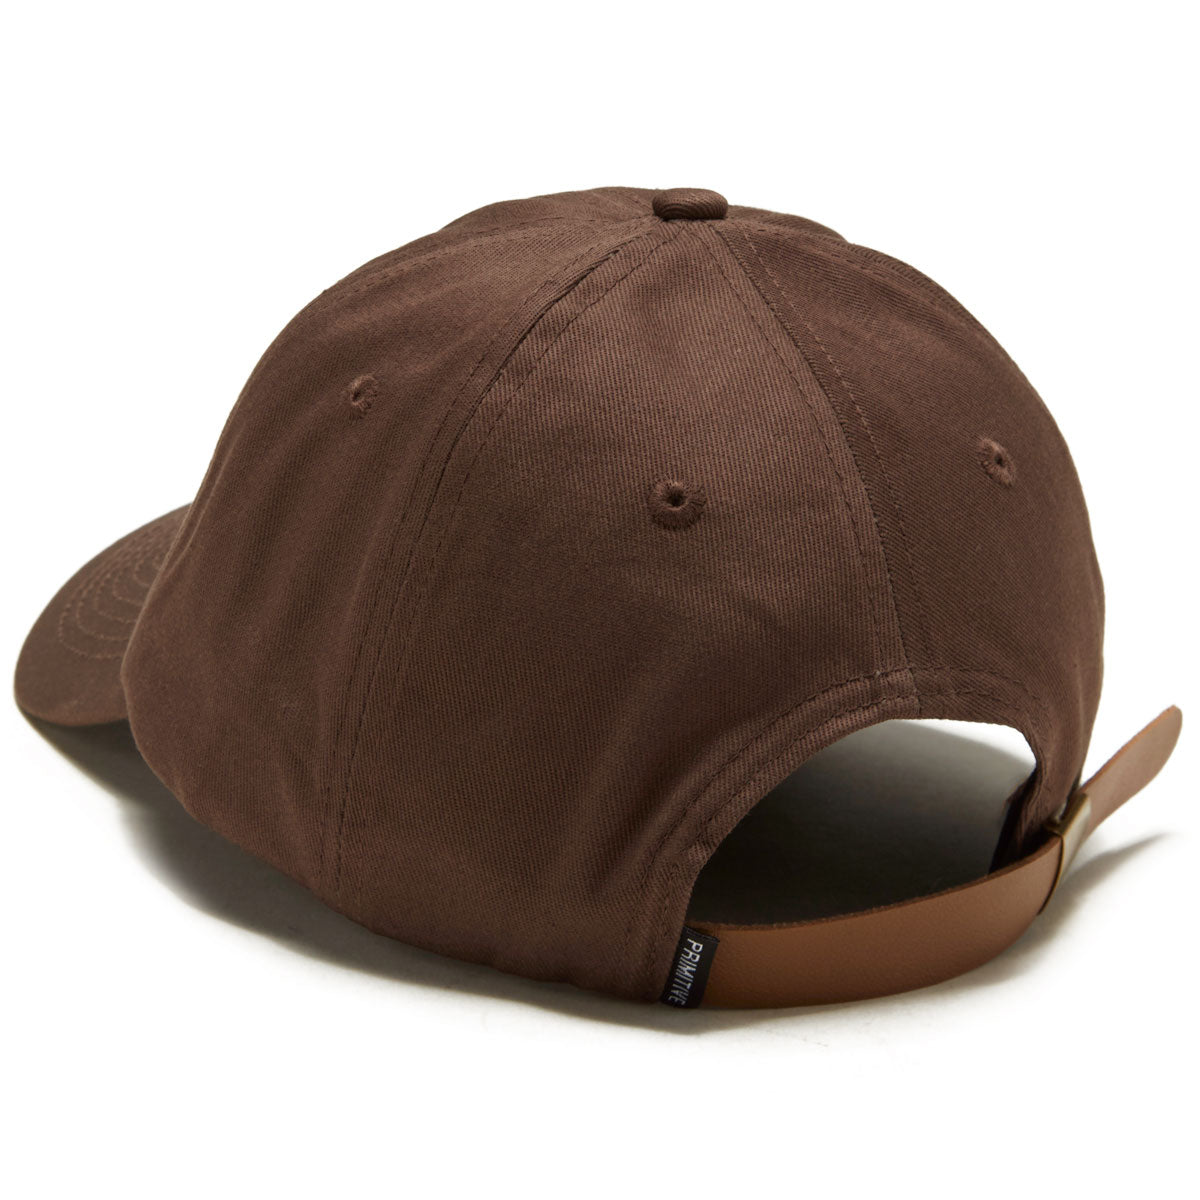 Primitive Dirty P Strapback Hat - Brown image 2